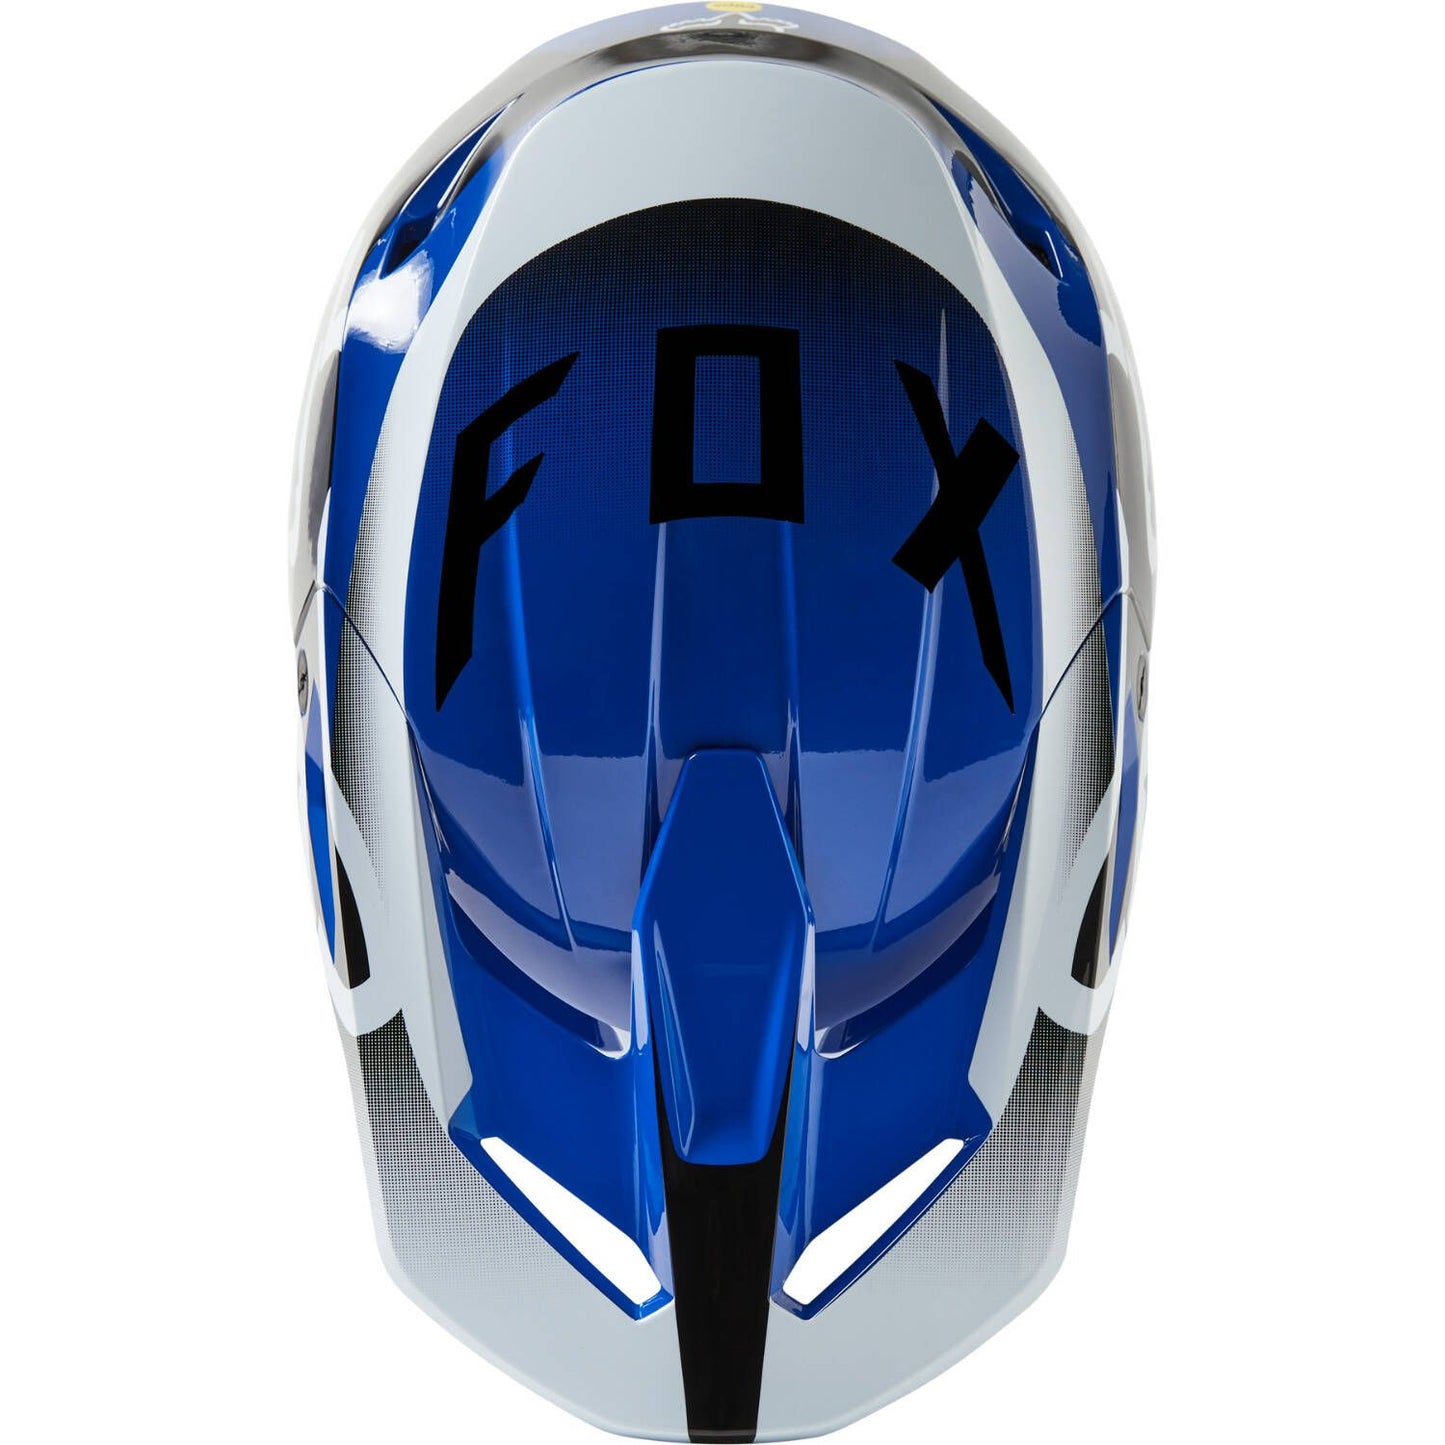 Fox V1 Leed MX Helmet - Blue